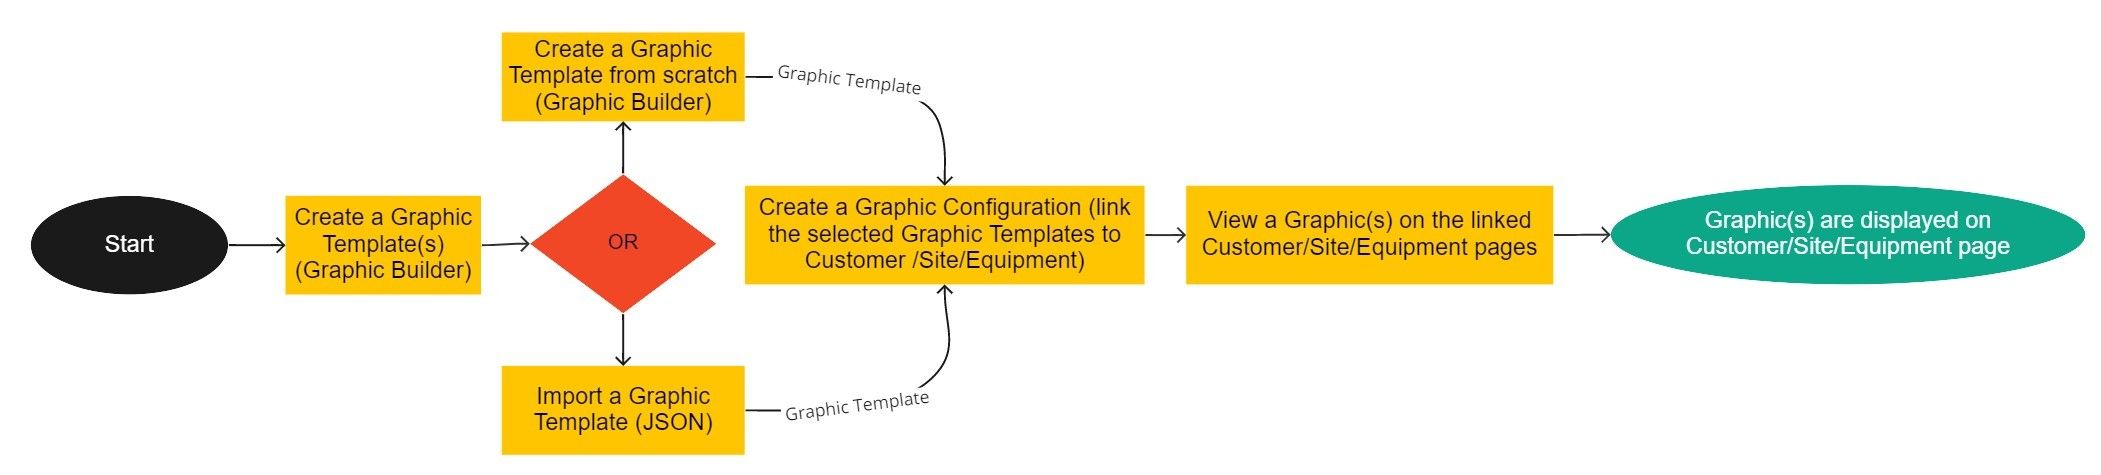 Graphics_Functionality_Workflow.jpeg